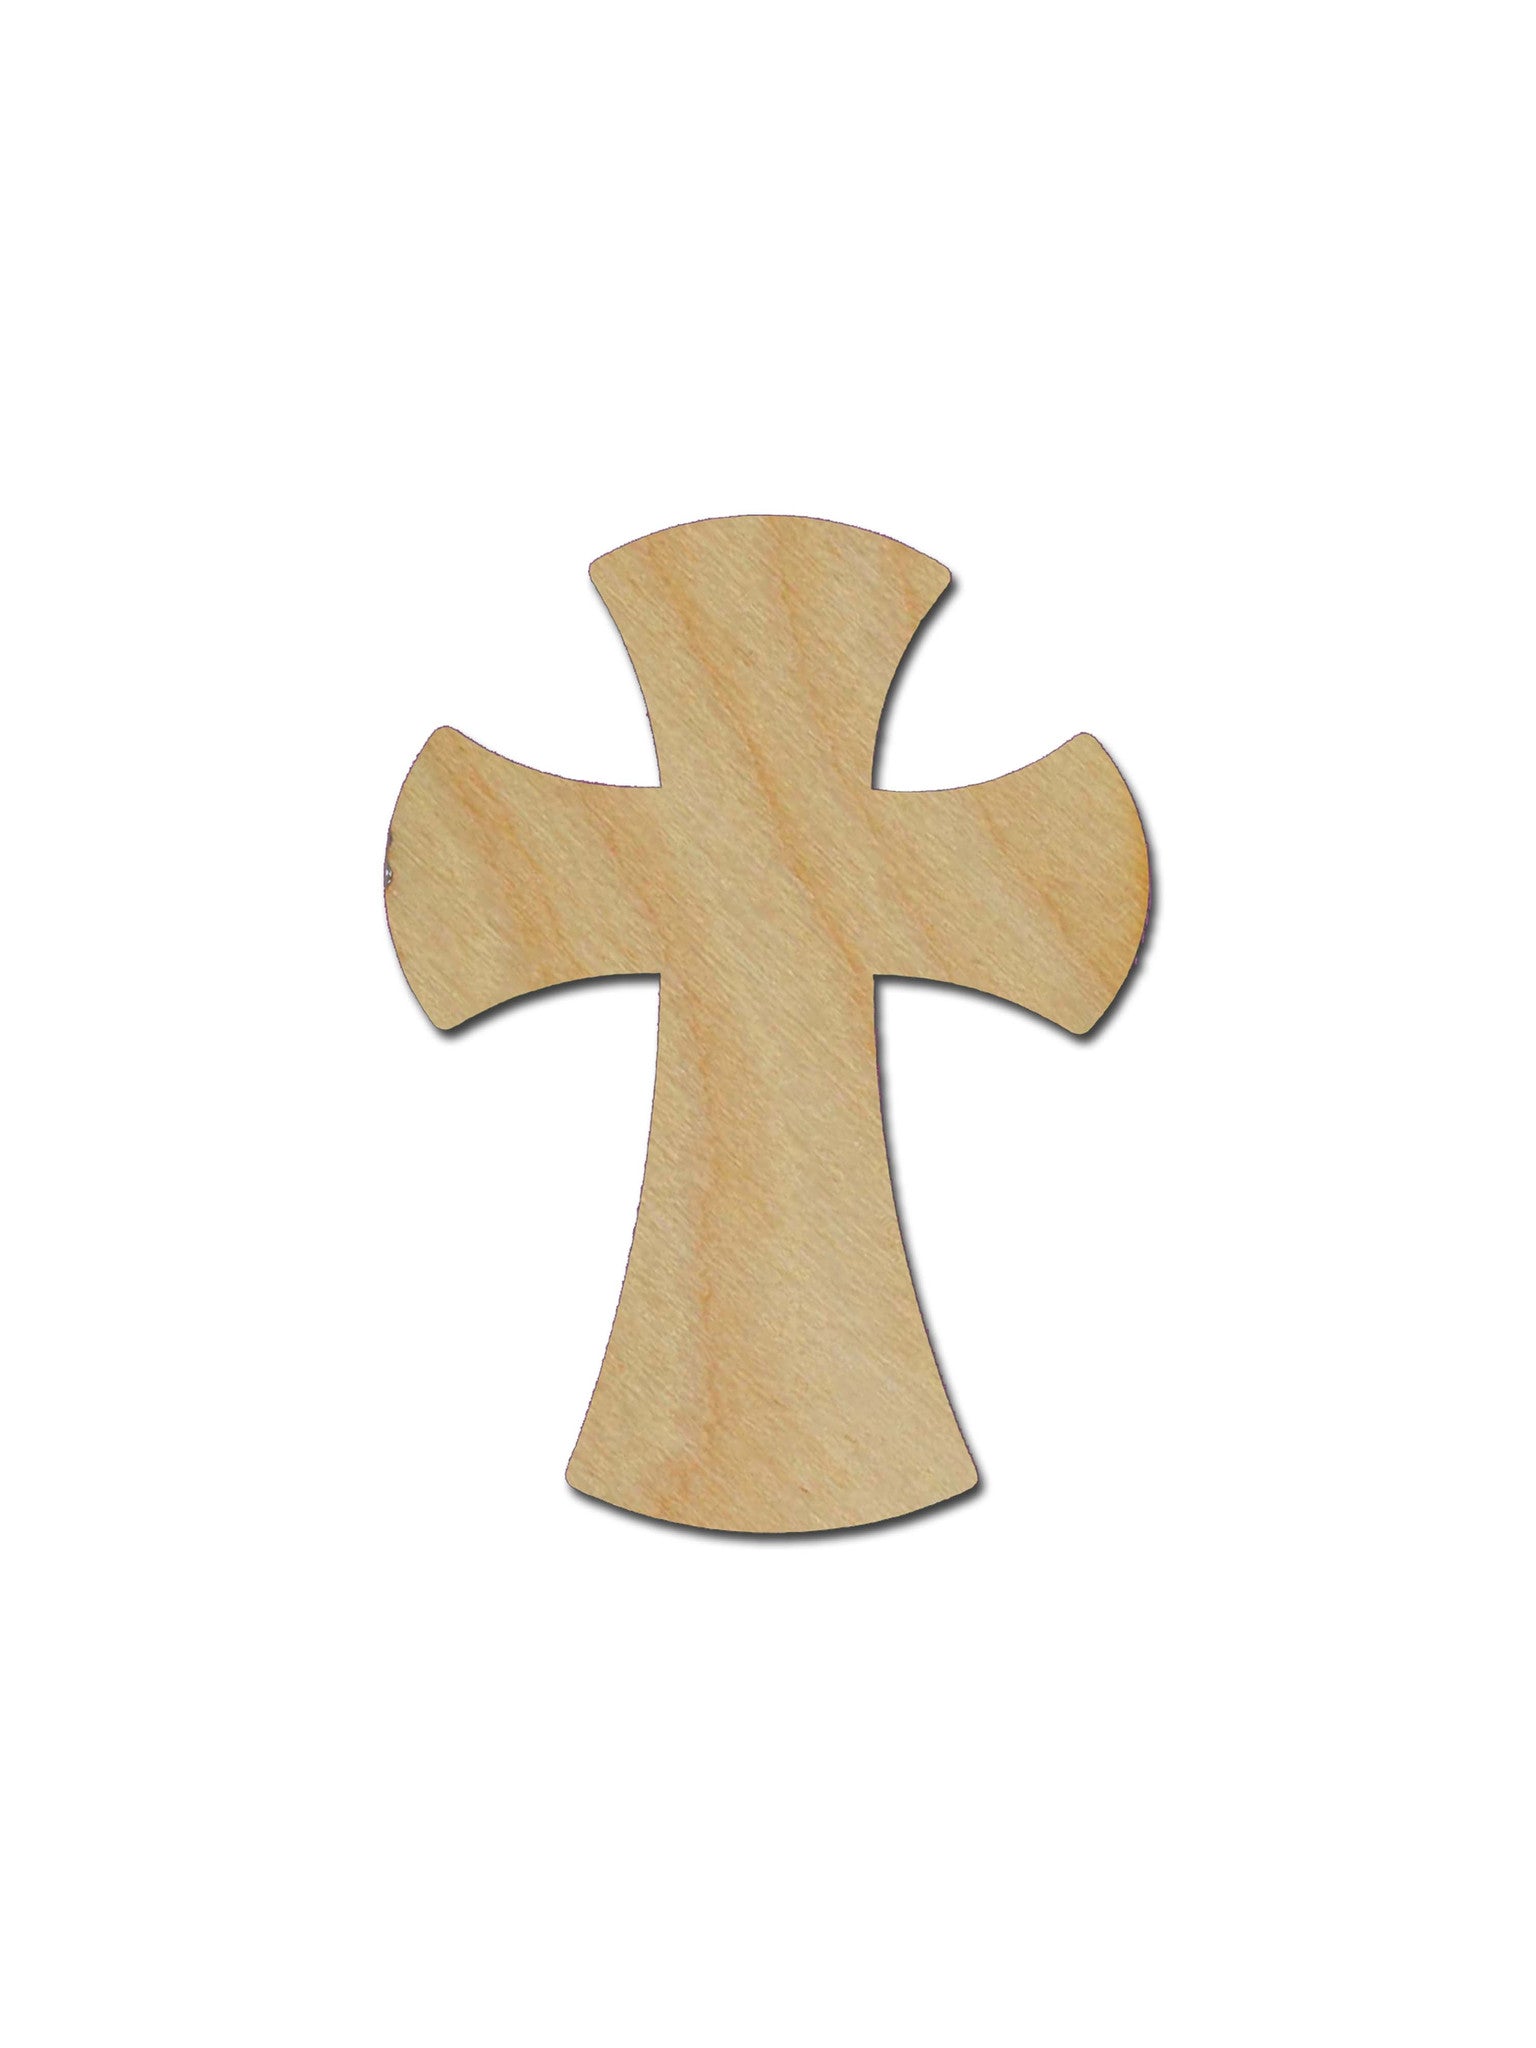 Unfinished Wood Cross